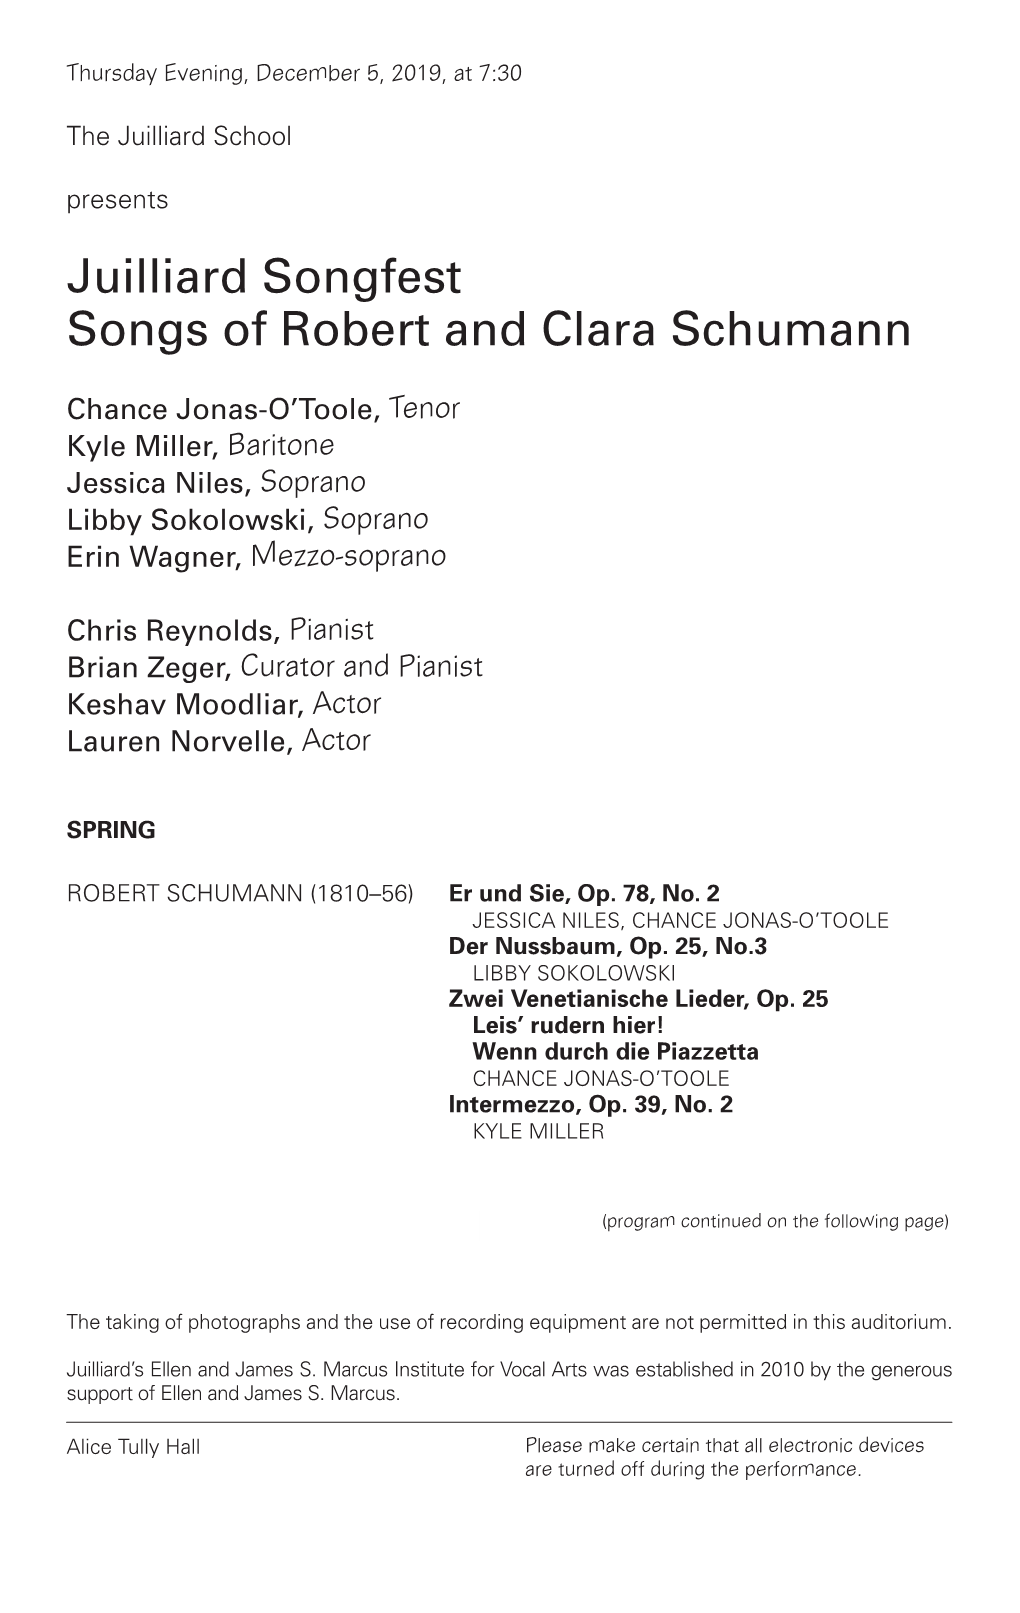 Juilliard Songfest Songs of Robert and Clara Schumann